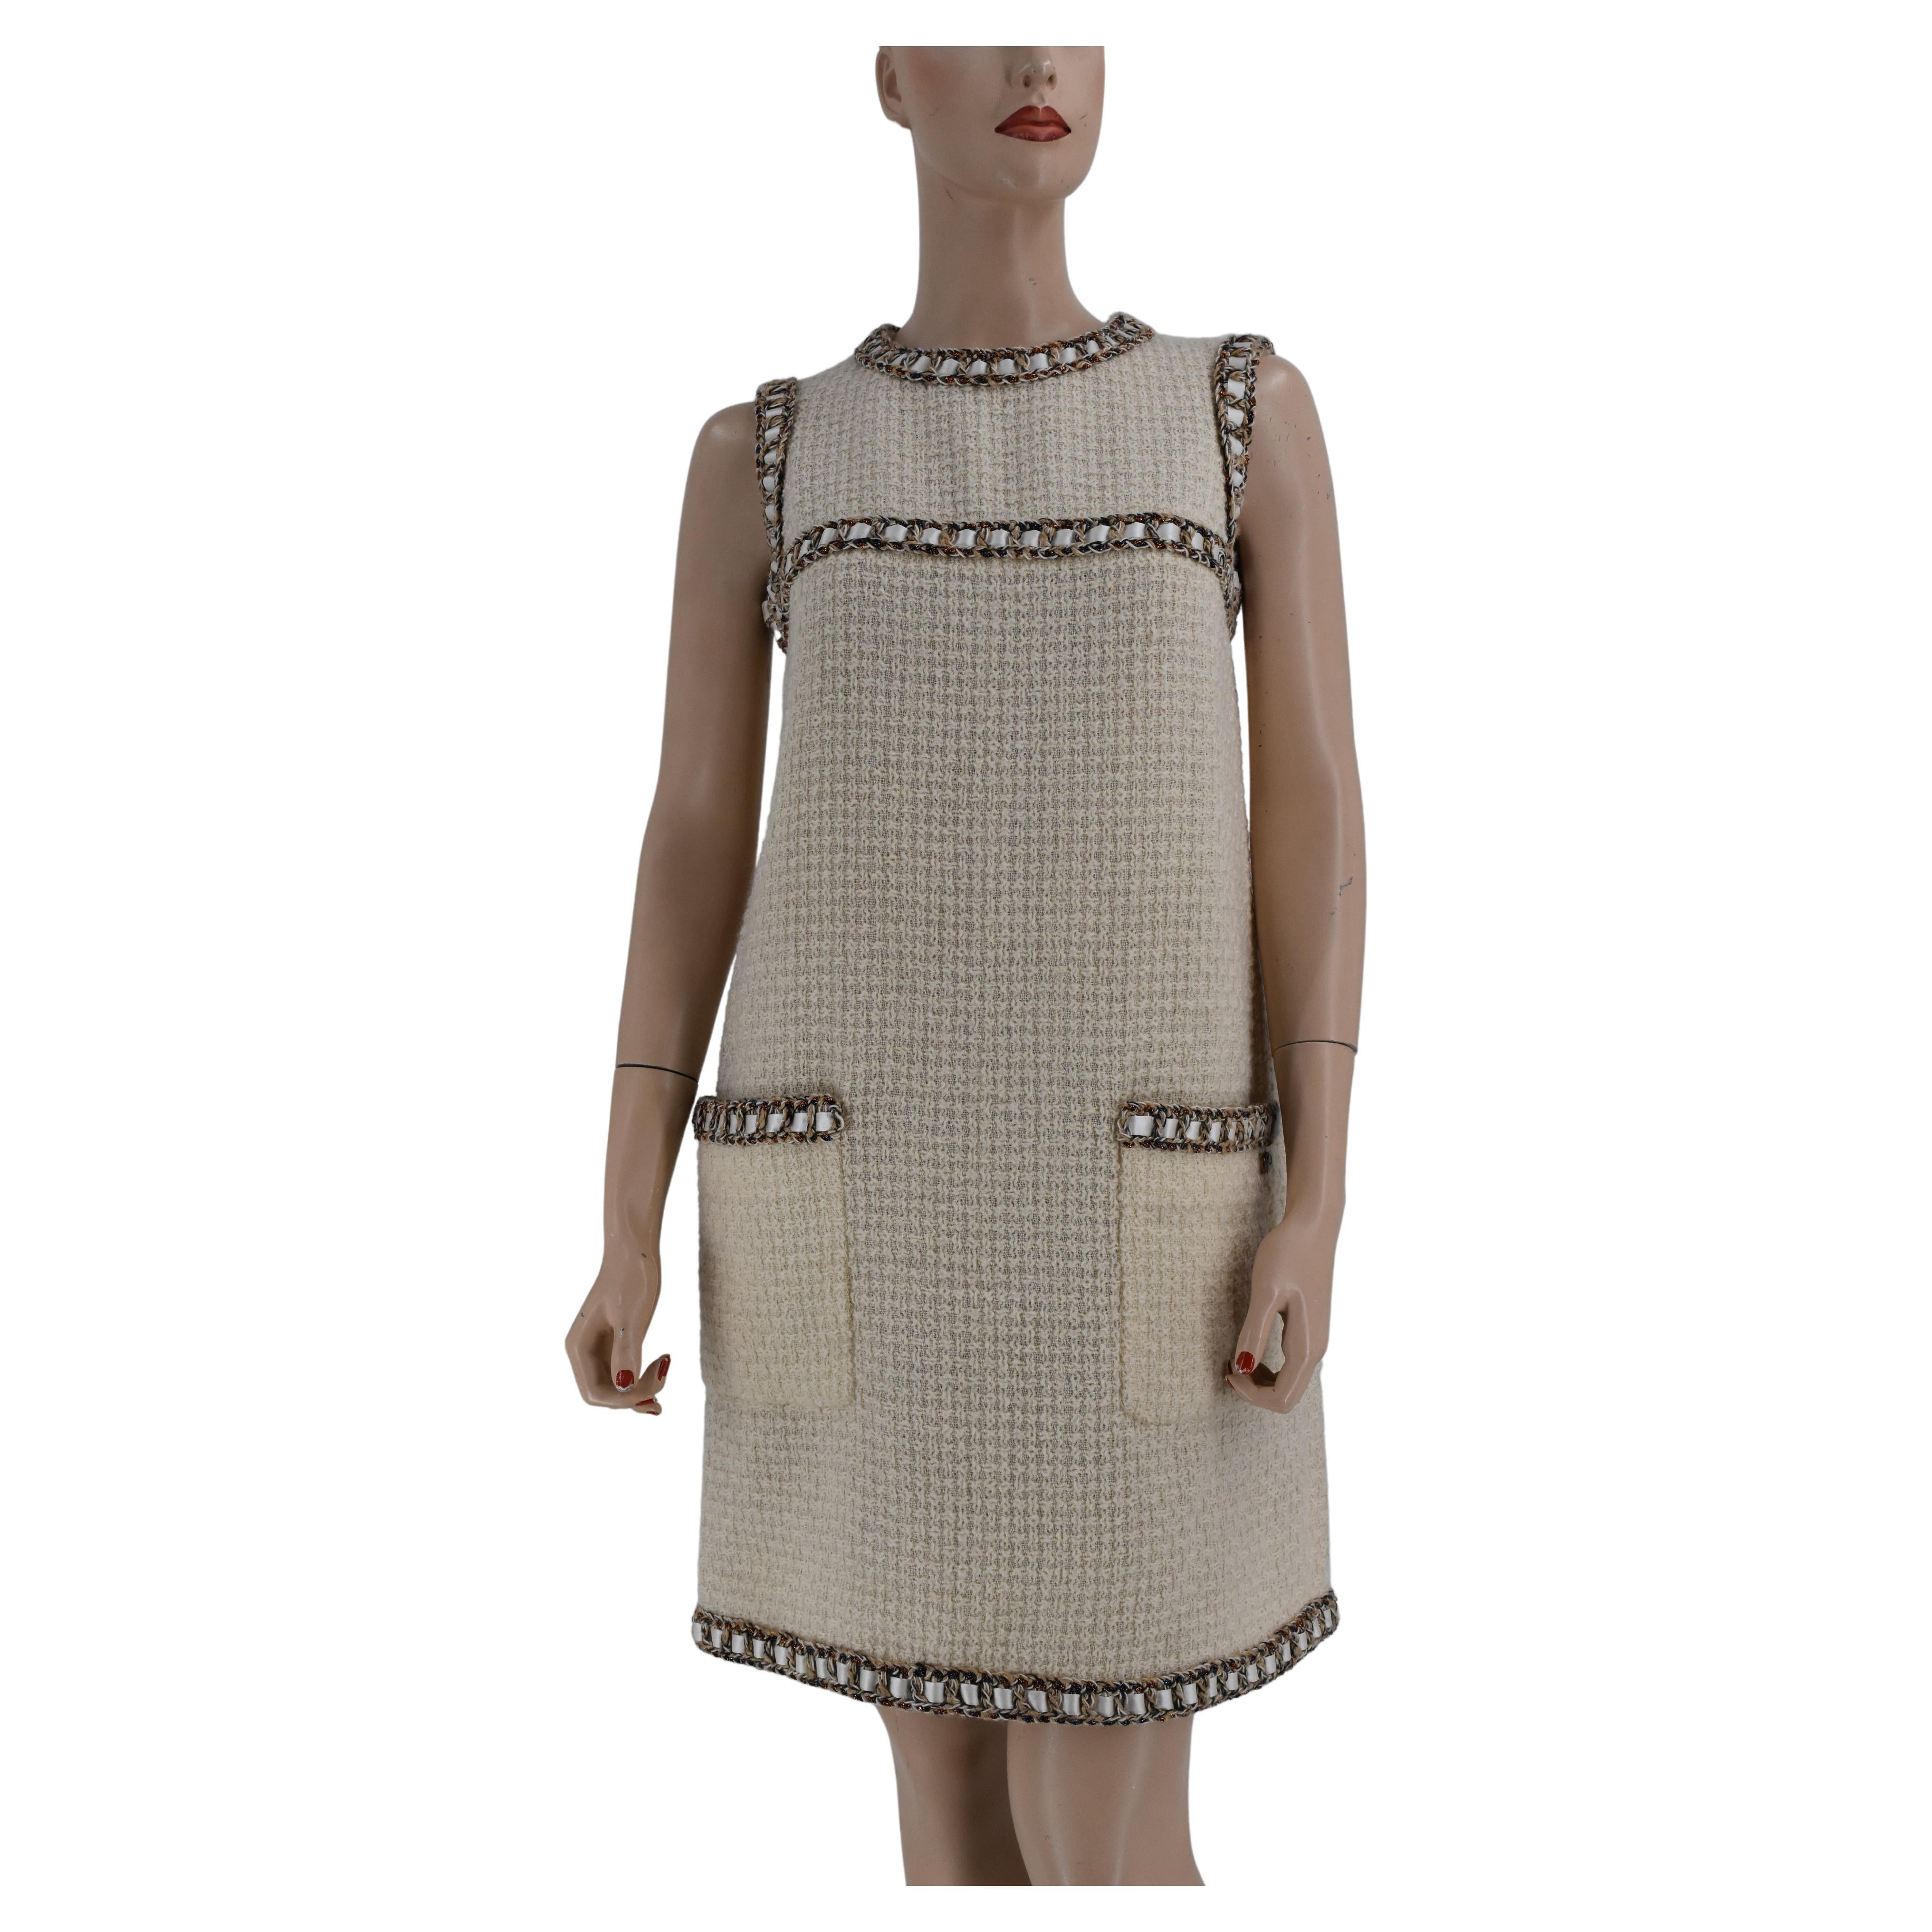 Chanel New 2016  Ribbon Embellished Dress 40 Rare